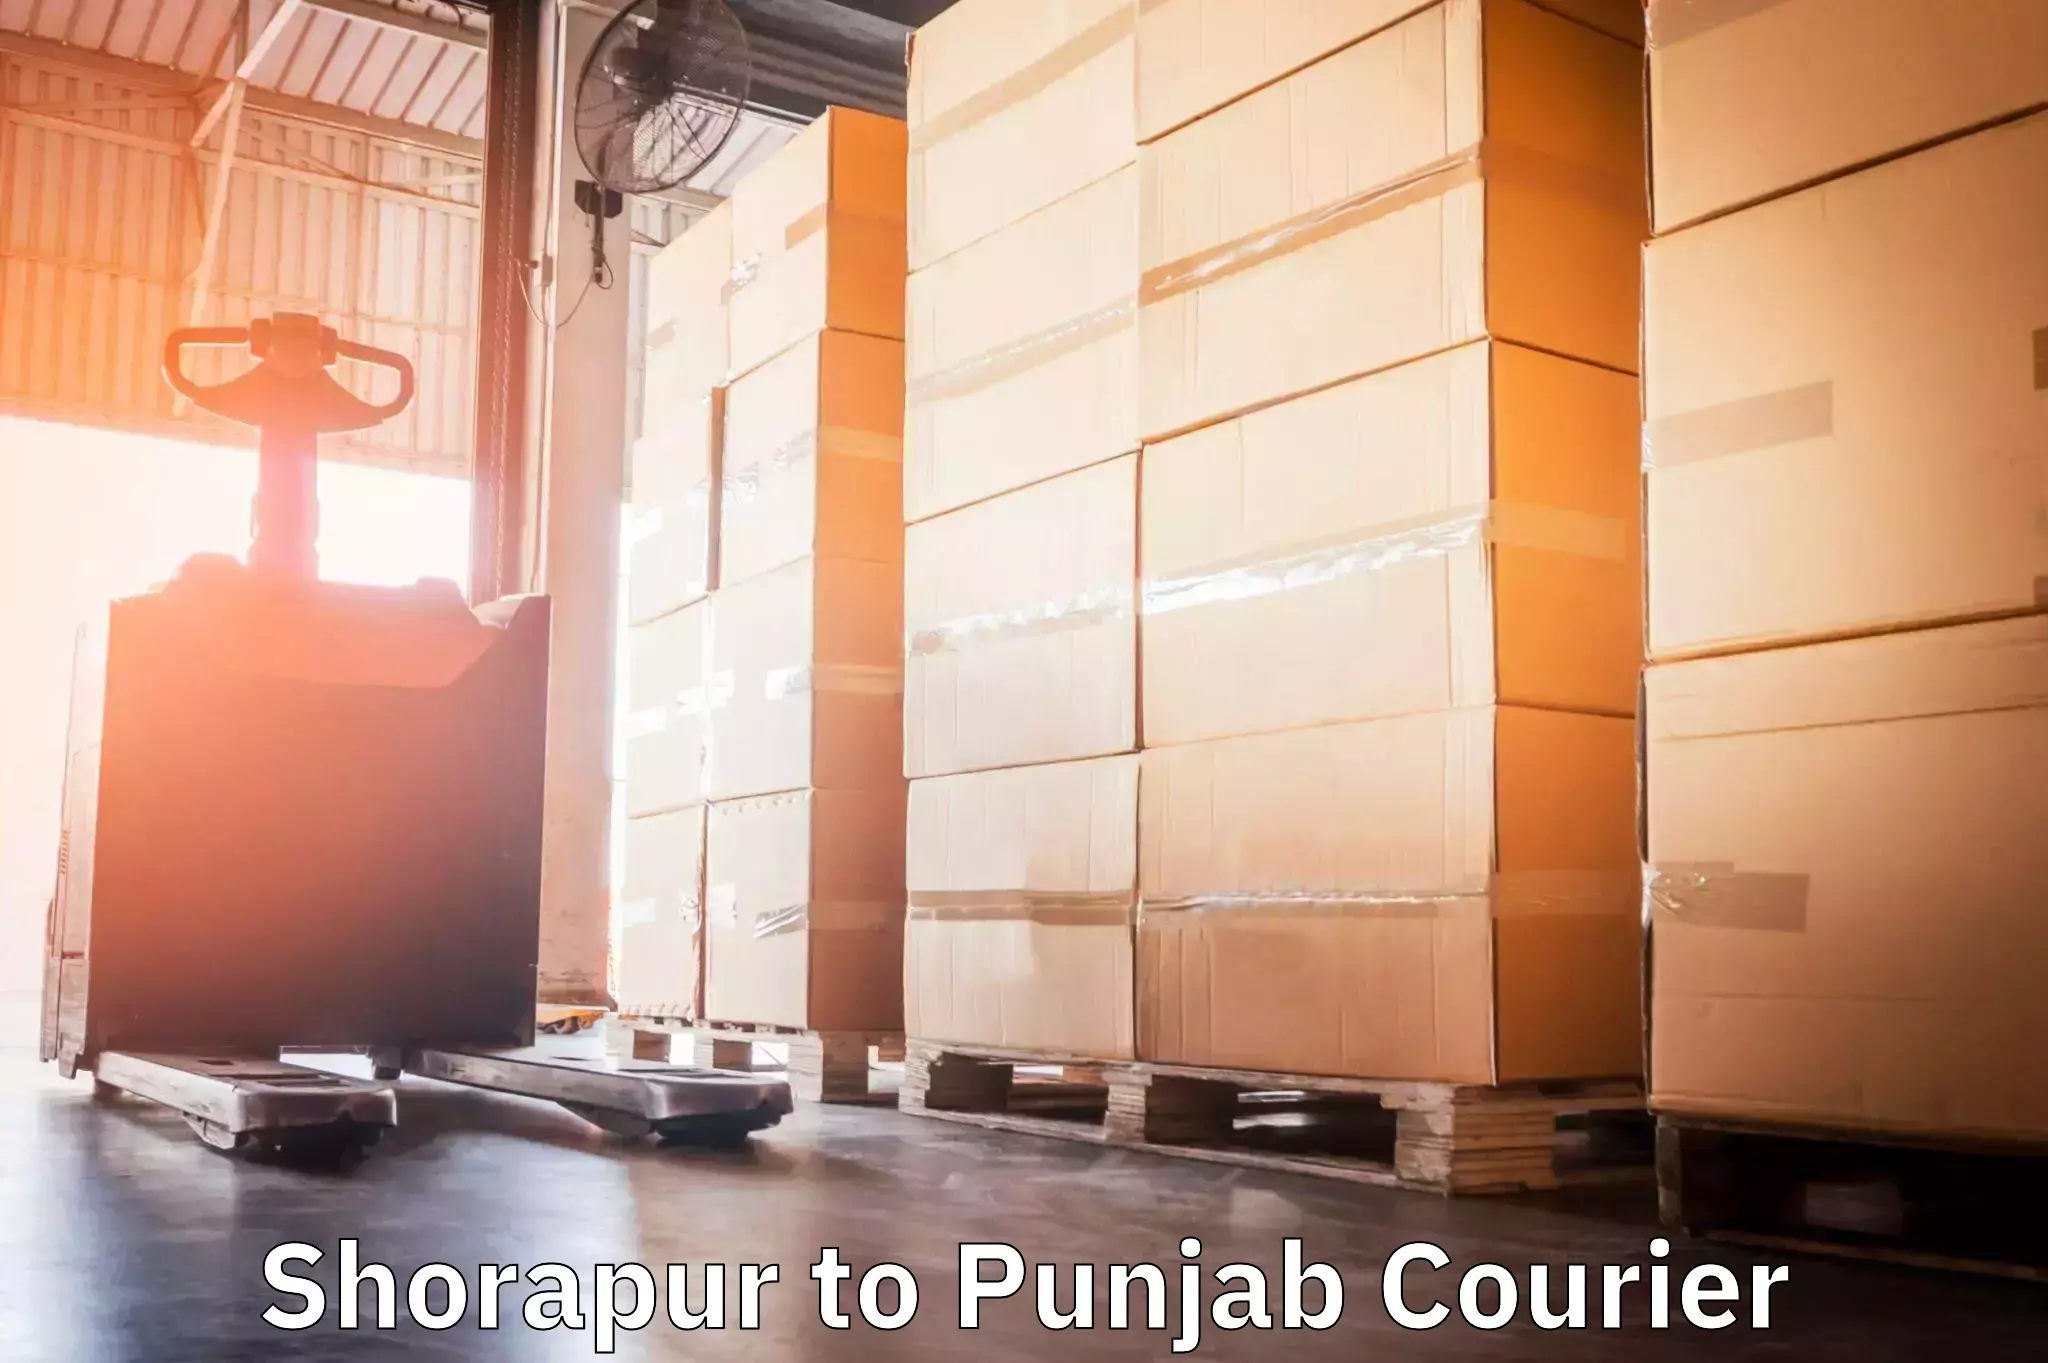 Automated parcel services Shorapur to Punjab